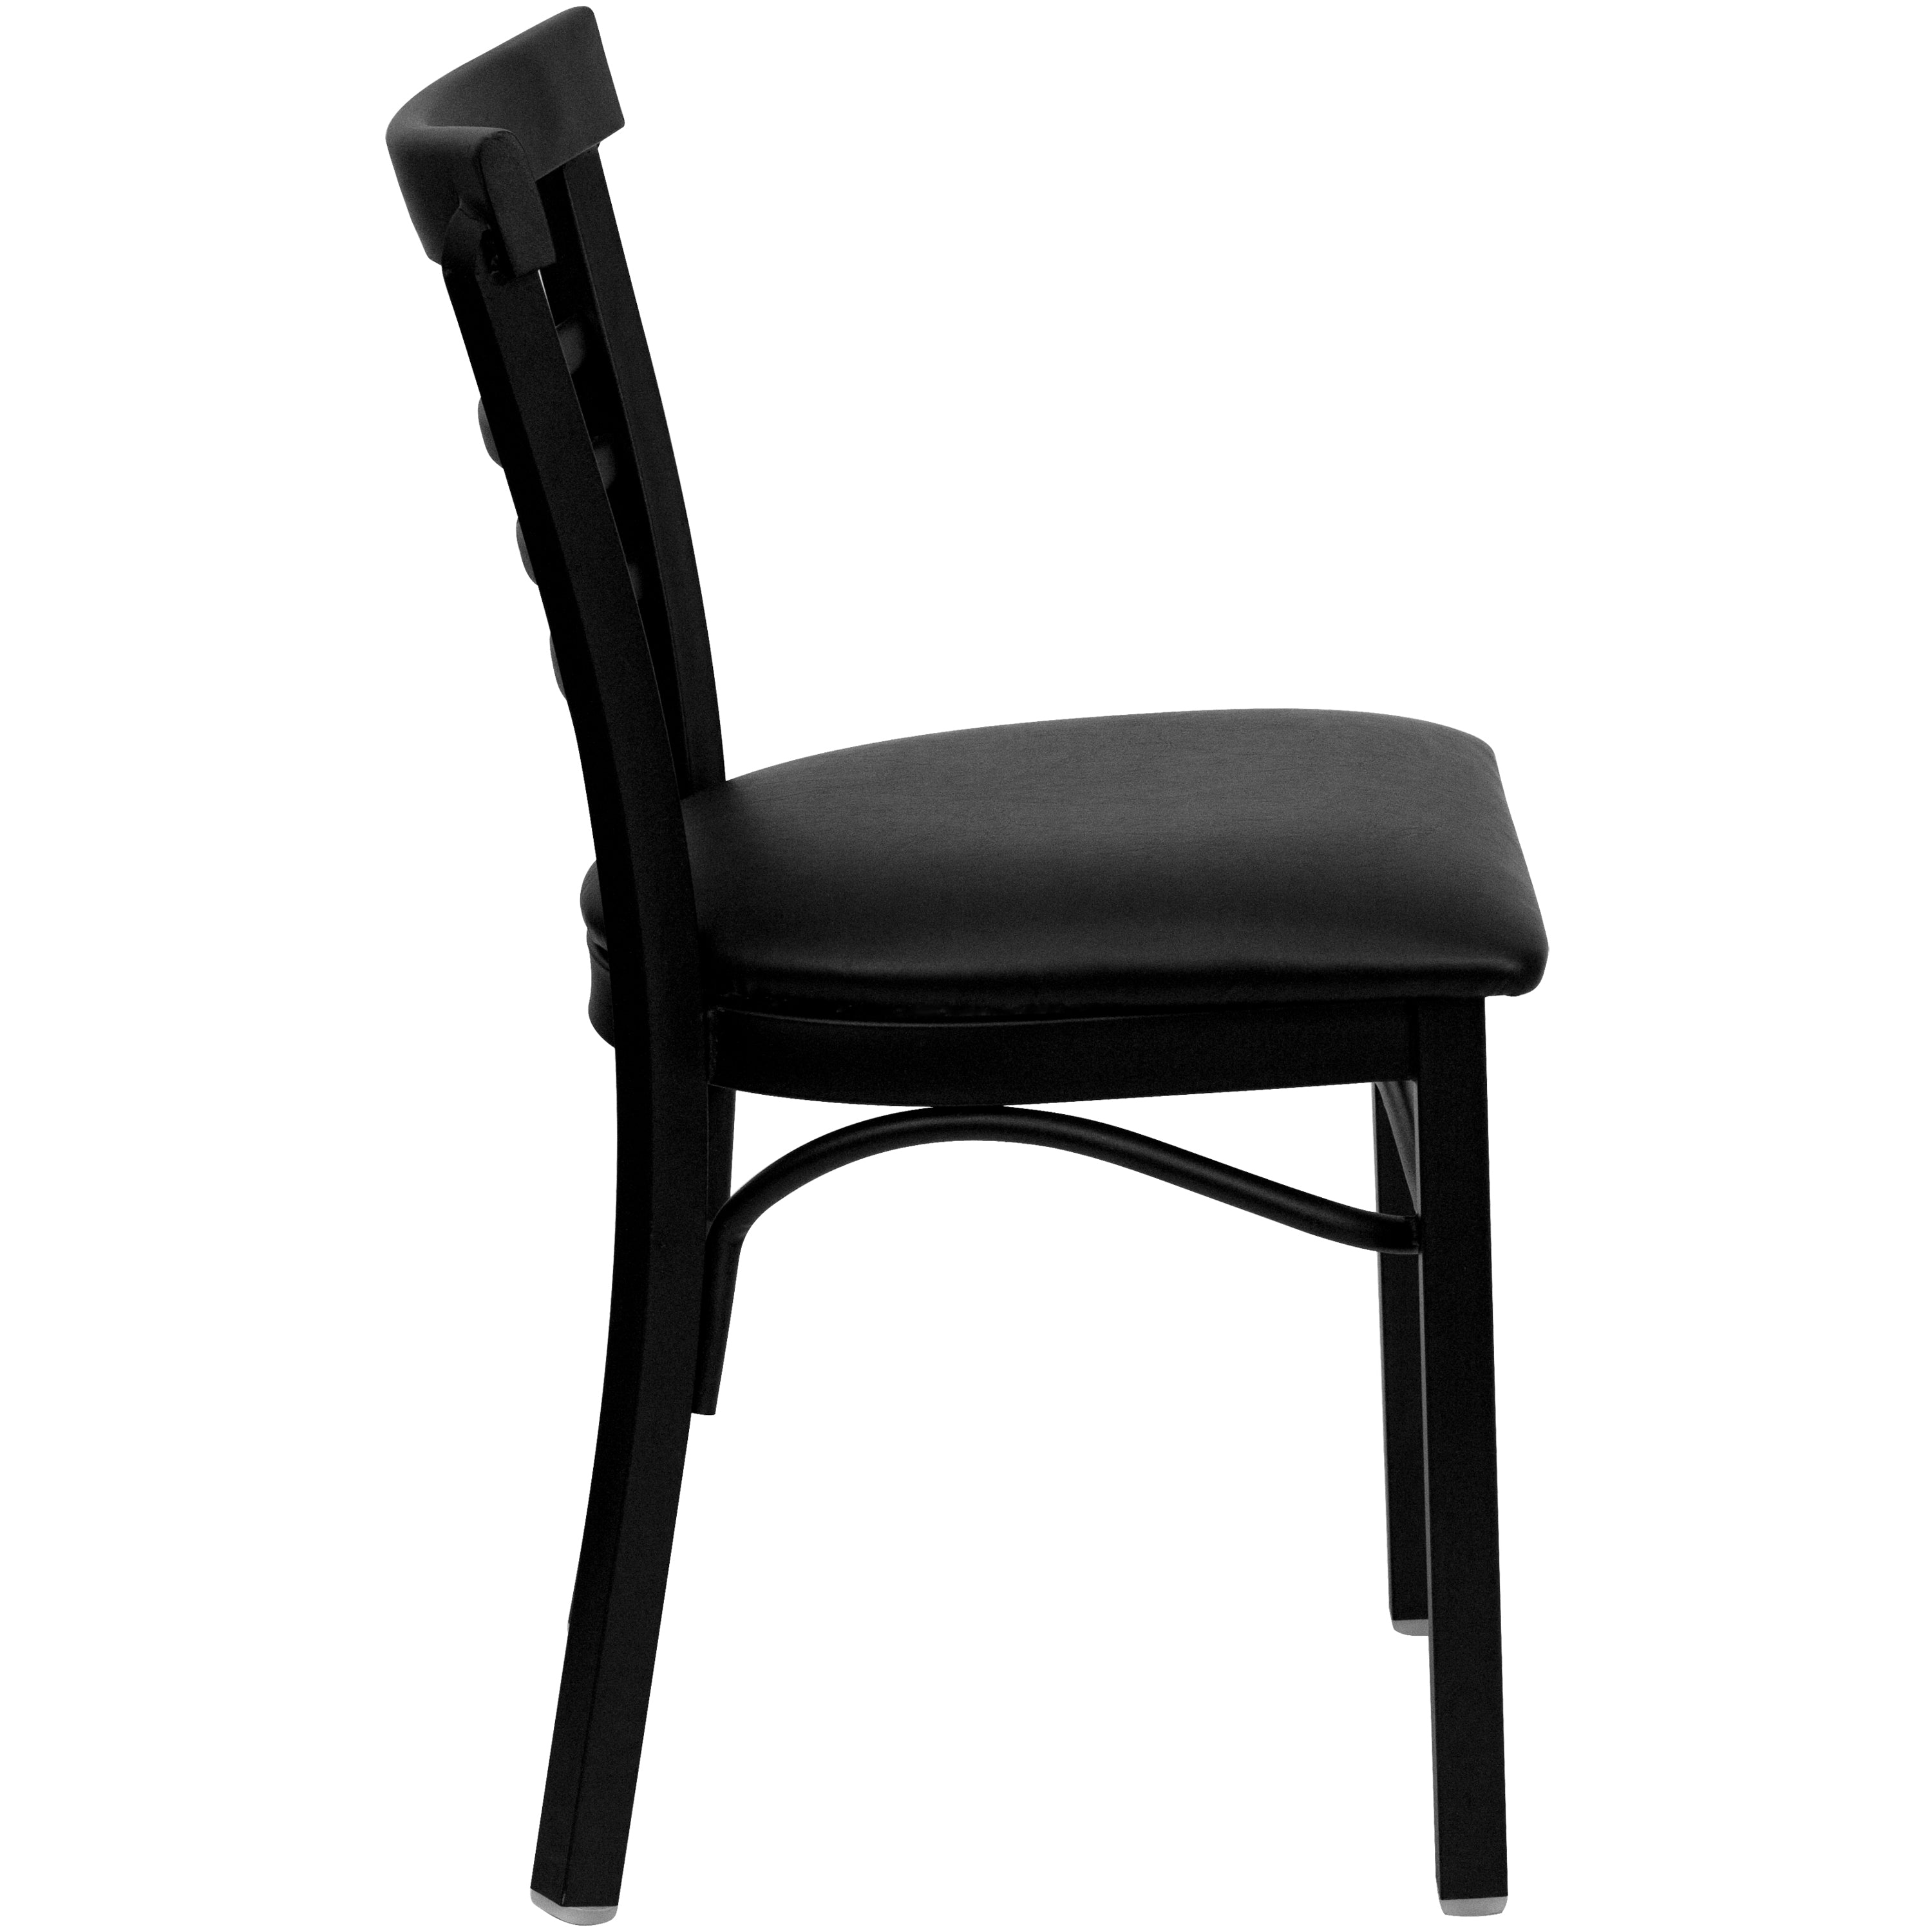 Three-Slat Ladder Back Metal Restaurant Chair-Metal Restaurant Chair-Flash Furniture-Wall2Wall Furnishings